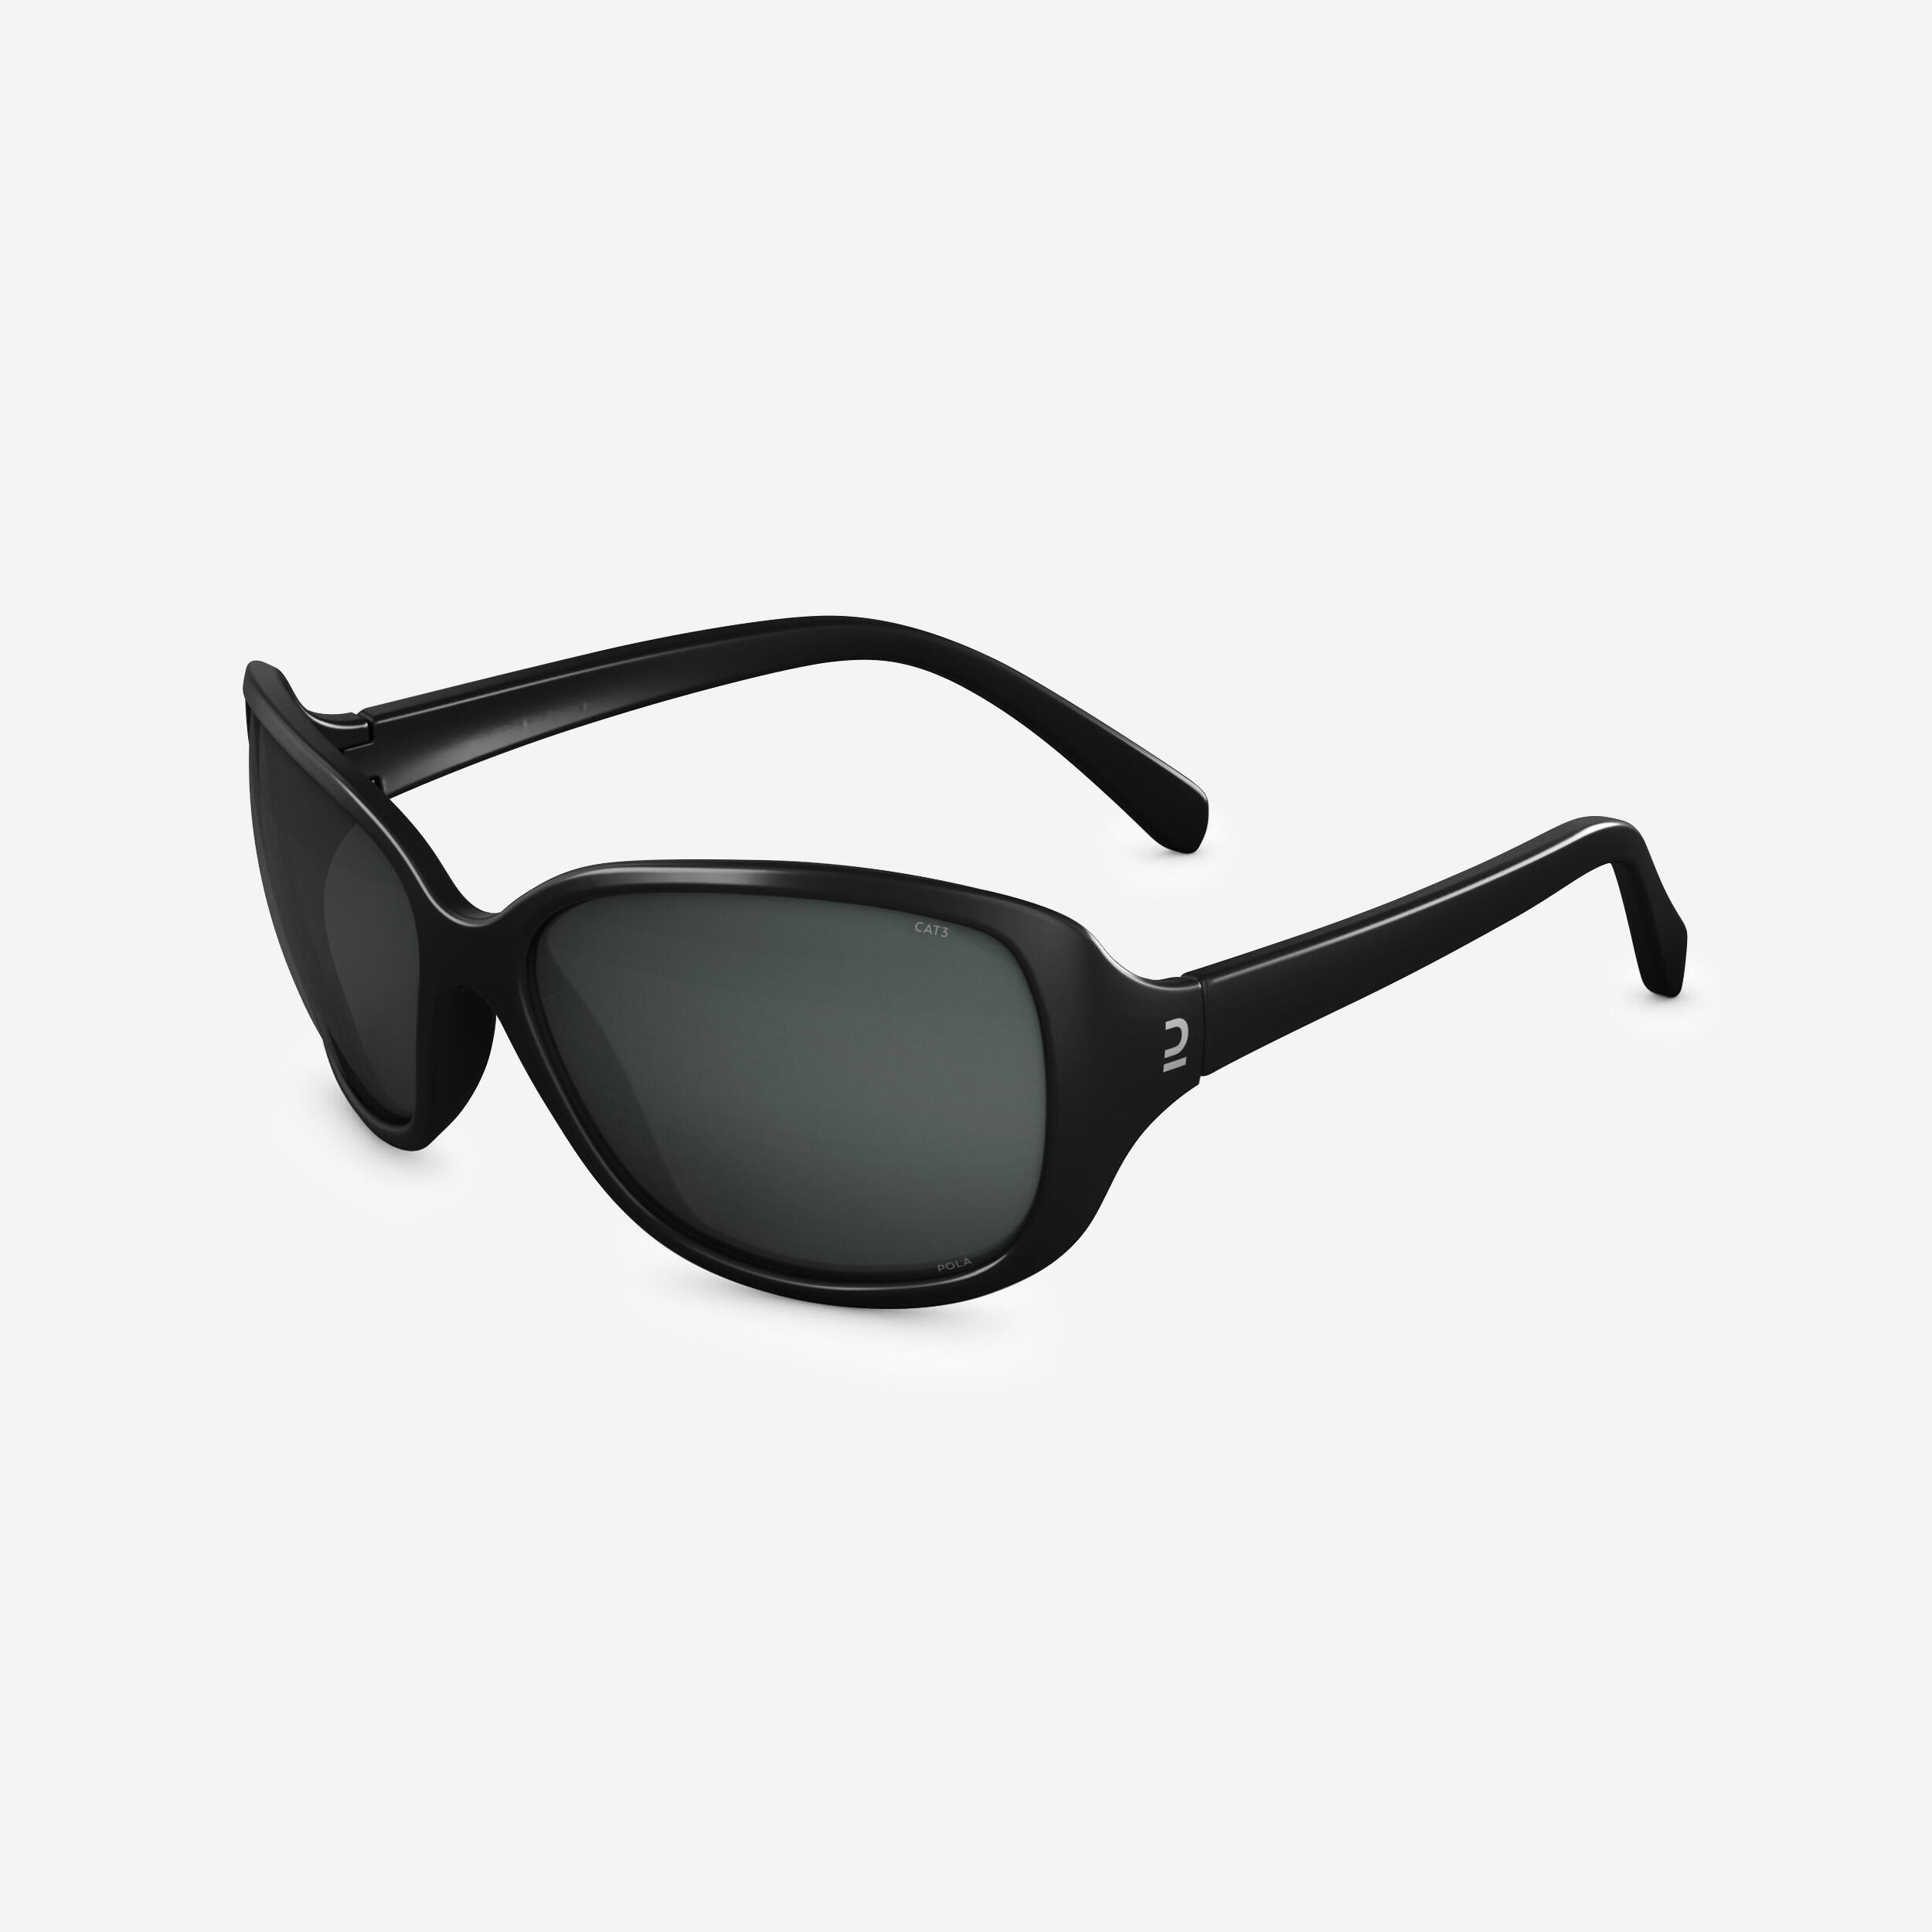 MH530 Hiking Polorized Sunglasses - Women